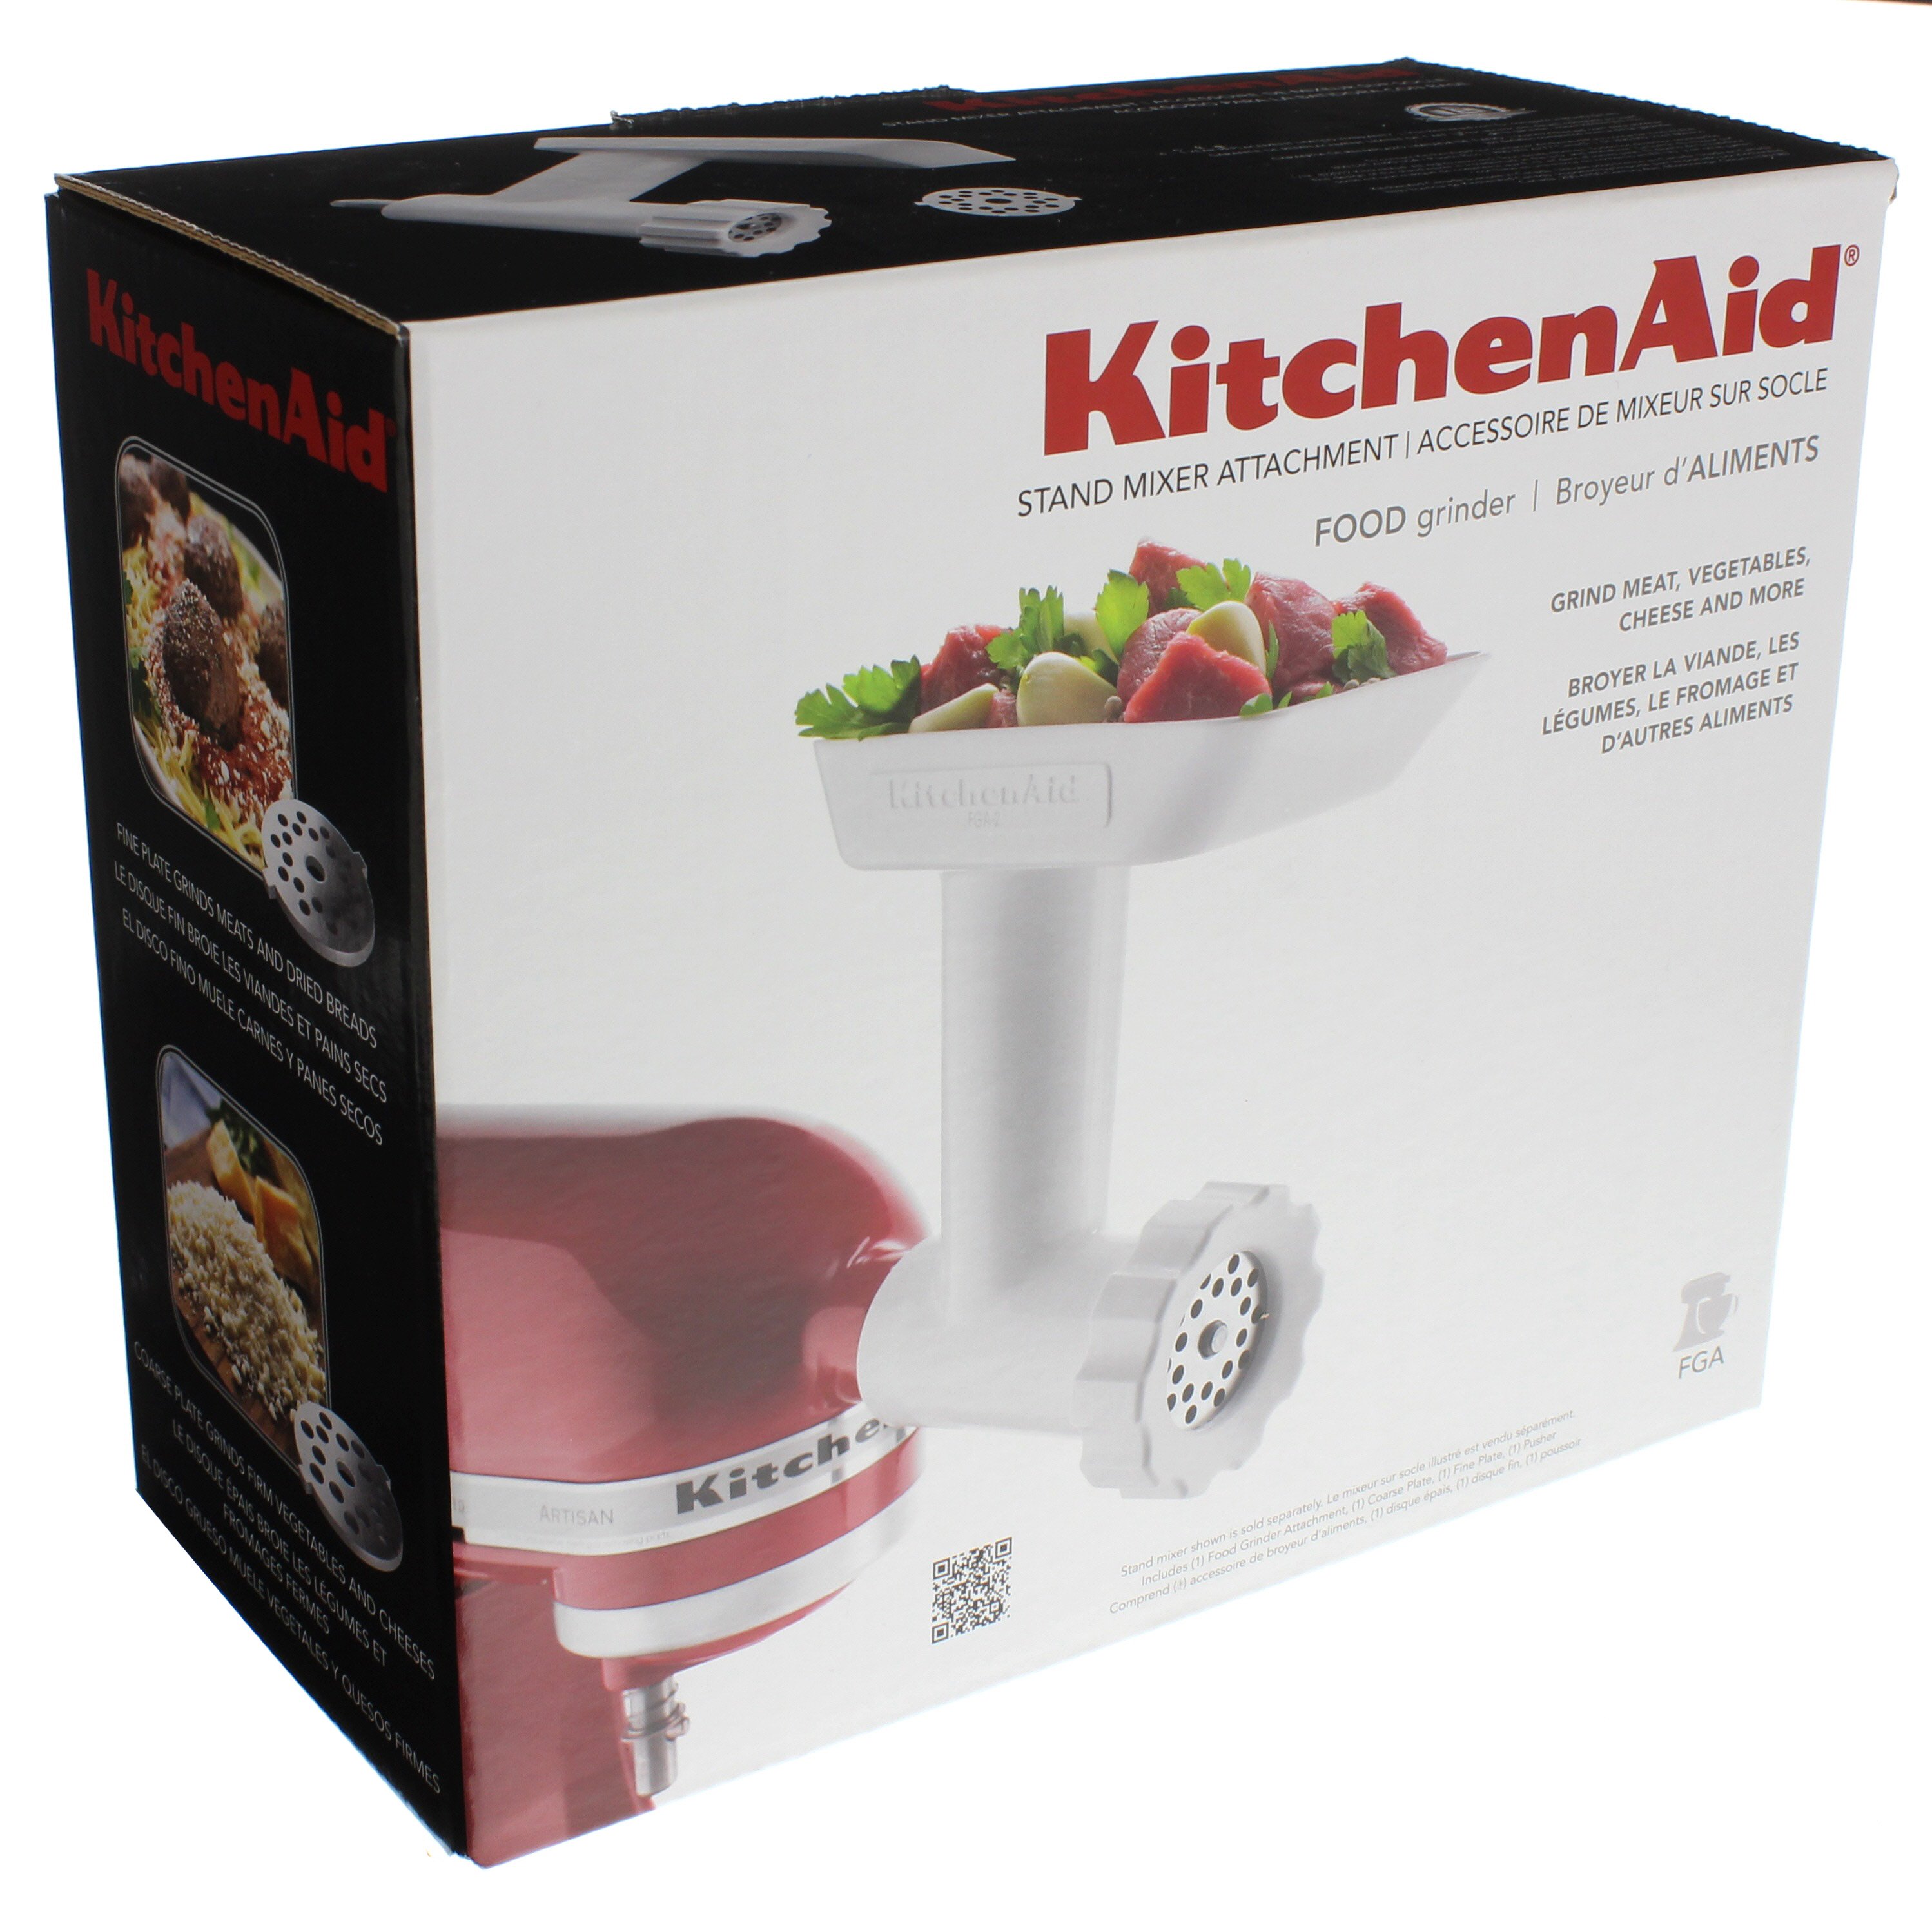 Kitchenaid Food Grinder Stand Mixer Attachment Shop Appliances At H E B